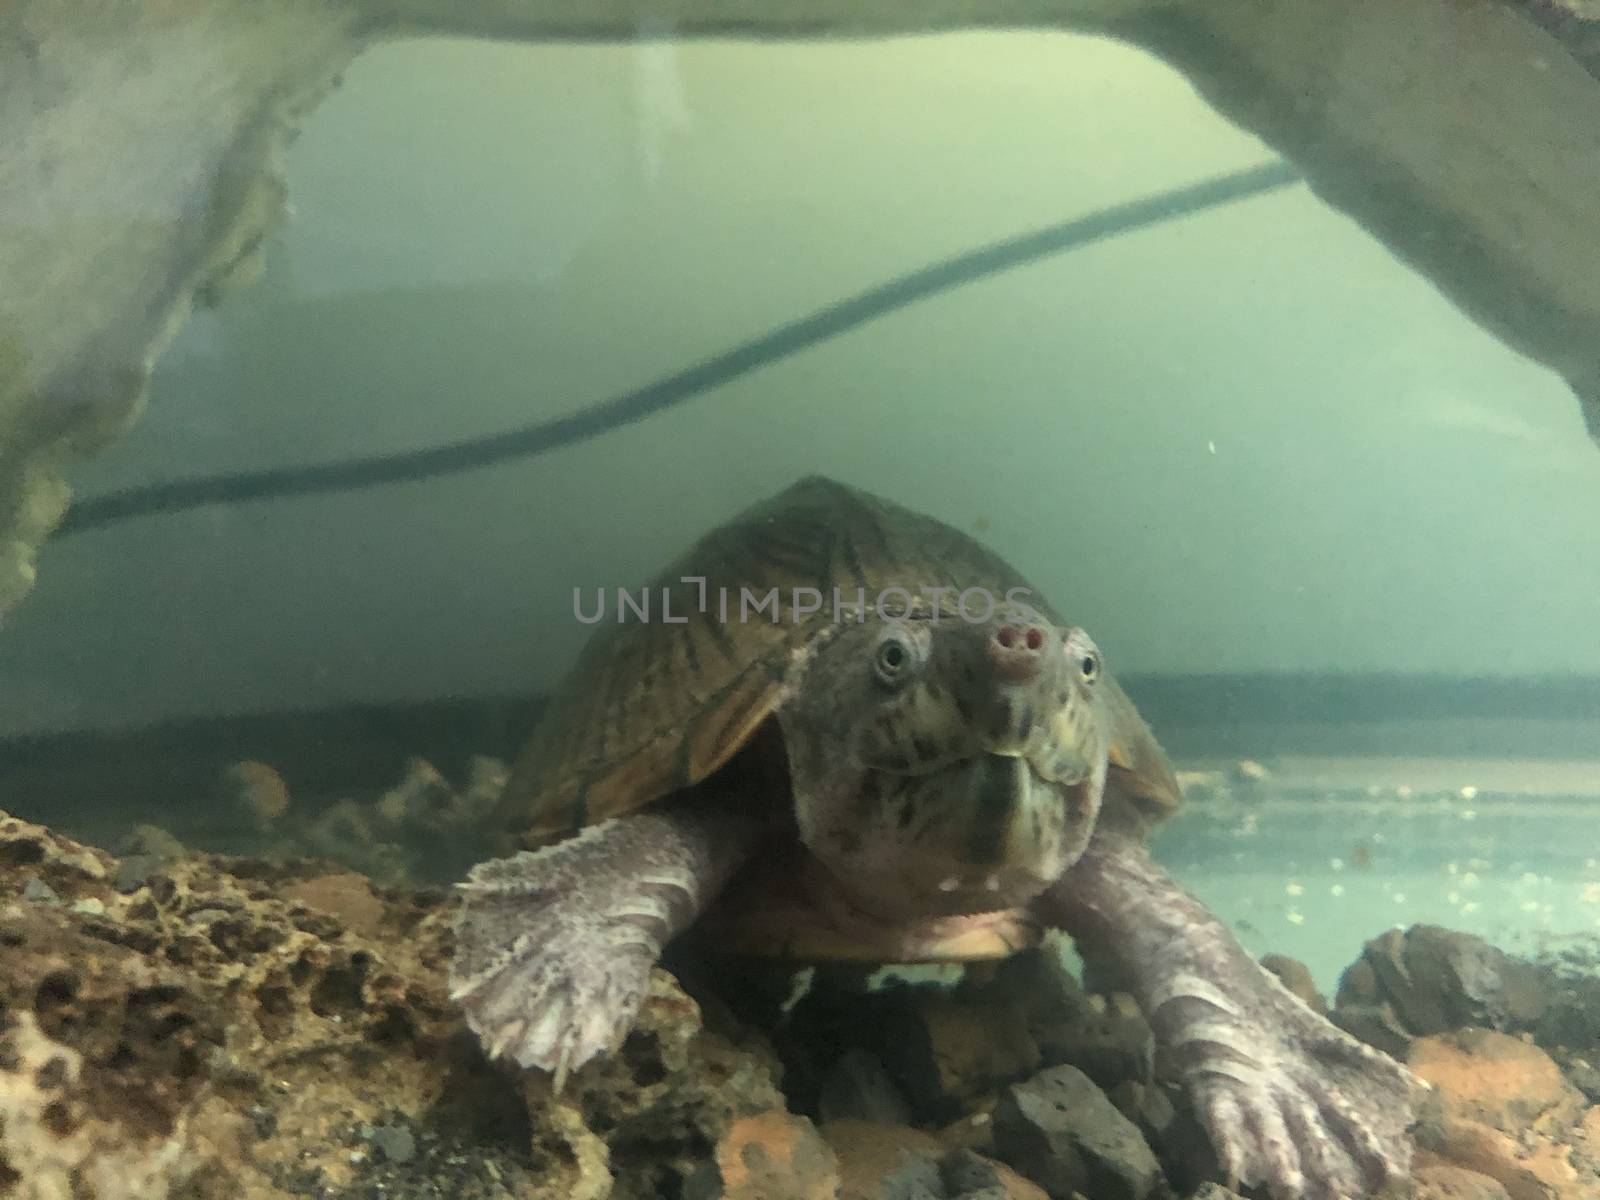 underwater razorback musk turtle. High quality photo